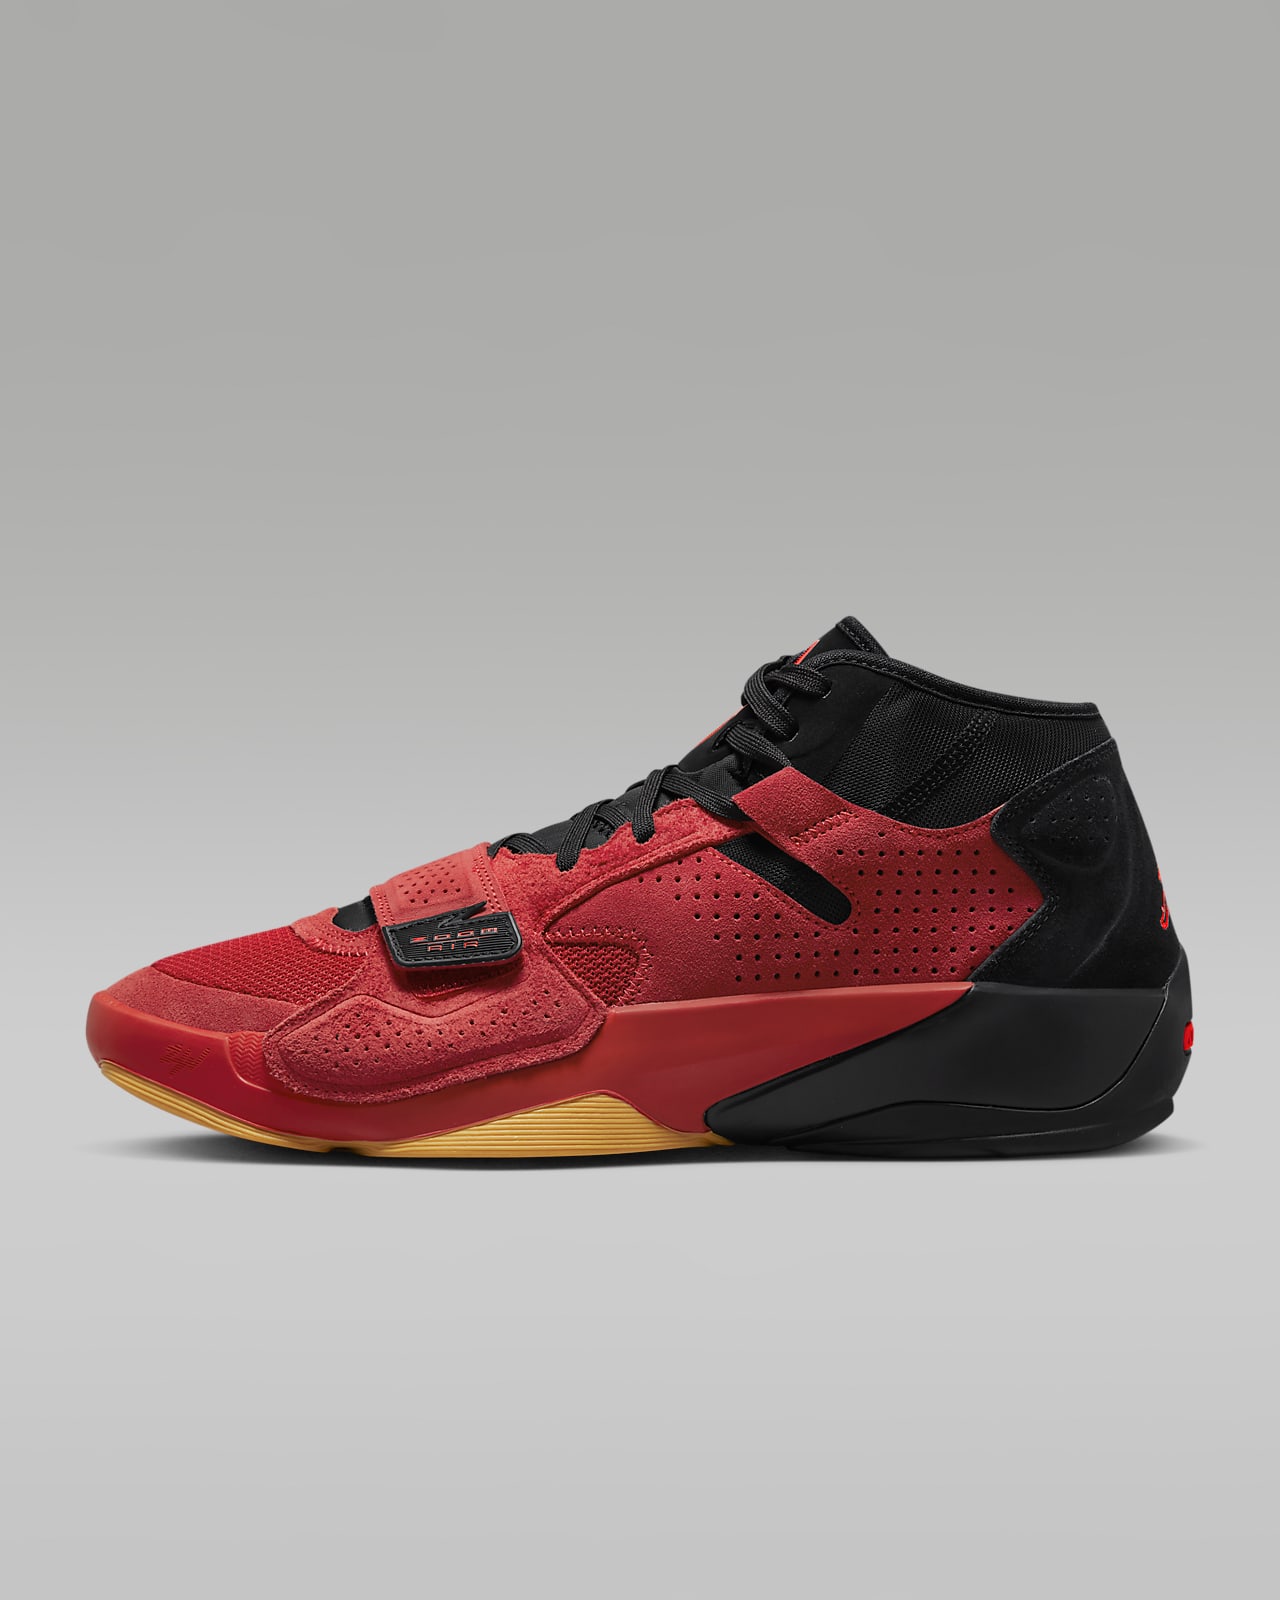 NIKE Men's Low-Top Sneakers Basketball Shoe, Black